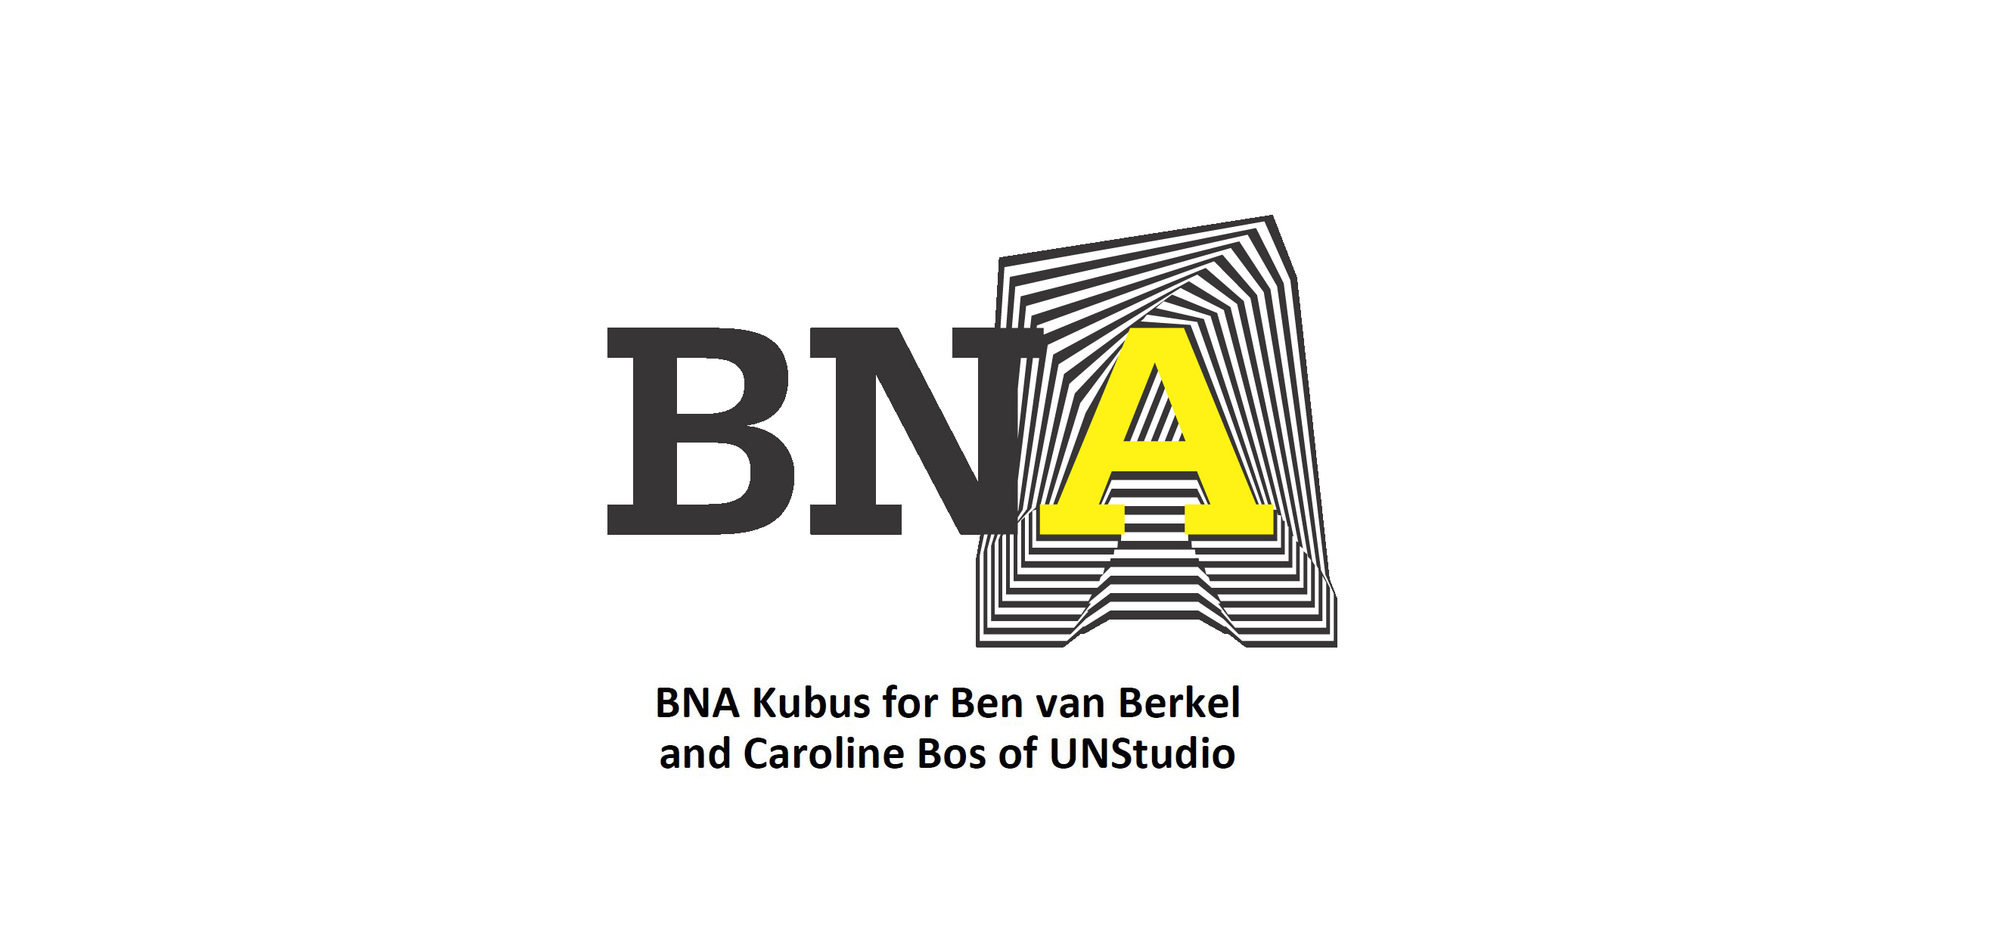 BNA Kubus awarded to Ben van Berkel and Caroline Bos